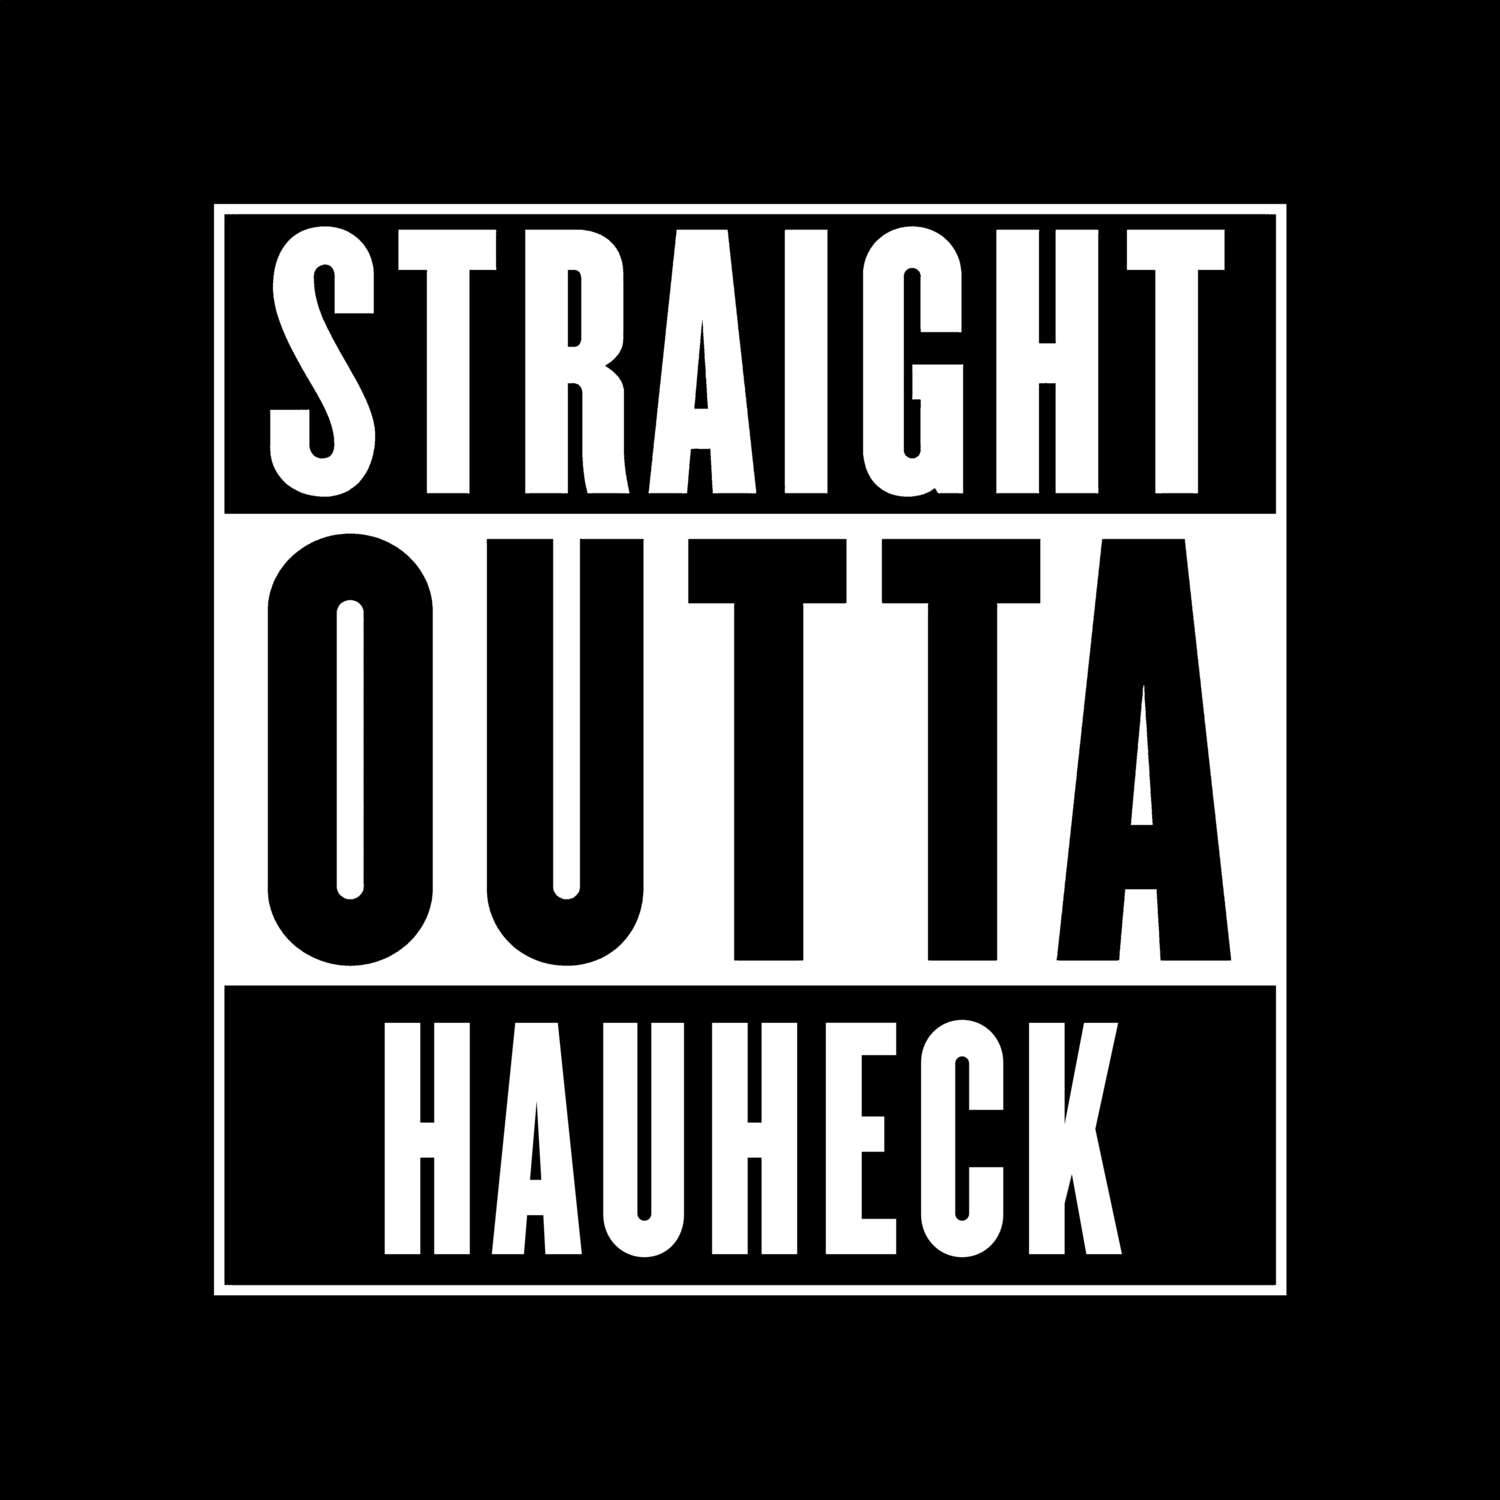 Hauheck T-Shirt »Straight Outta«